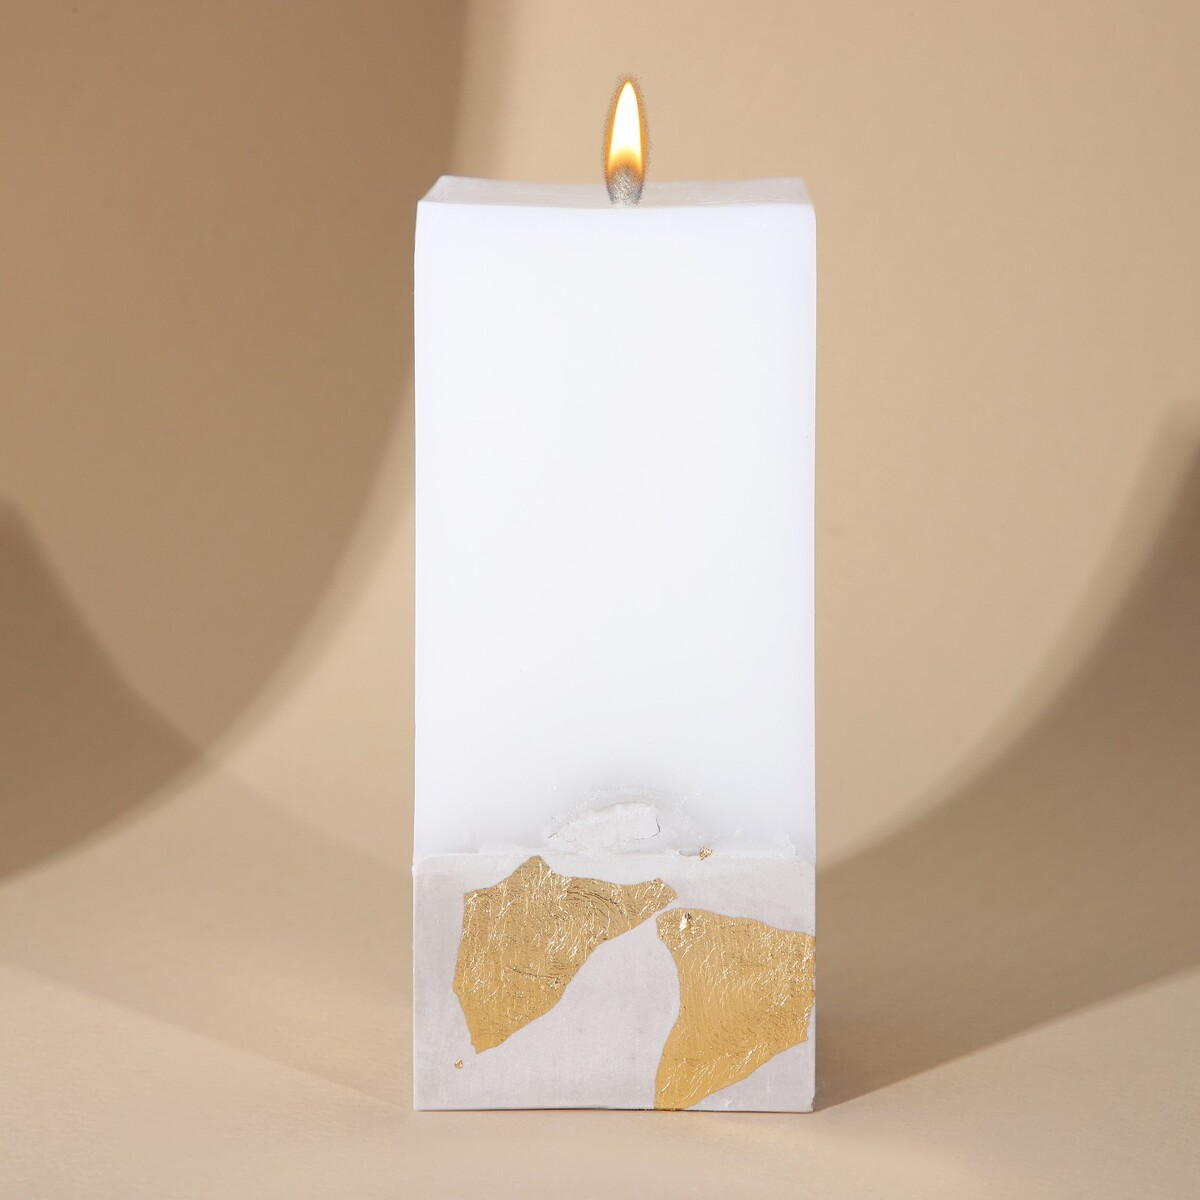 Свеча интерьерная белая с бетоном (поталь), 6 х 6 х 14 см свеча античная 2 2х26 см белая 2 ч